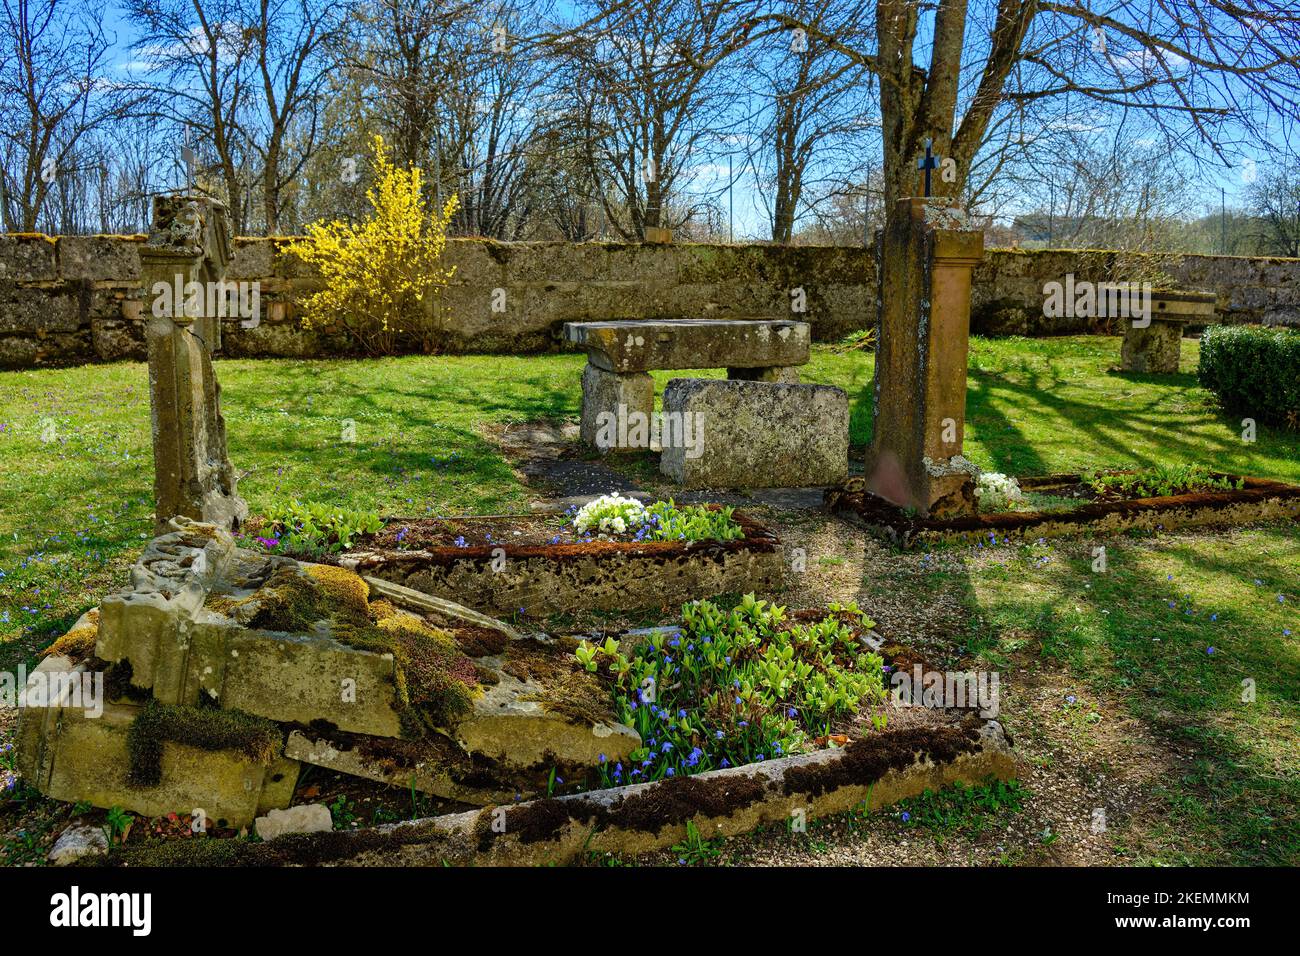 Friedhof Wüstung Dorf Gruorn, ehemaliger Truppenübungsplatz Gutsbezirk Münsingen, Biosphärenreservat Schwäbische Alb, Baden-Württemberg, Alemania. Foto de stock